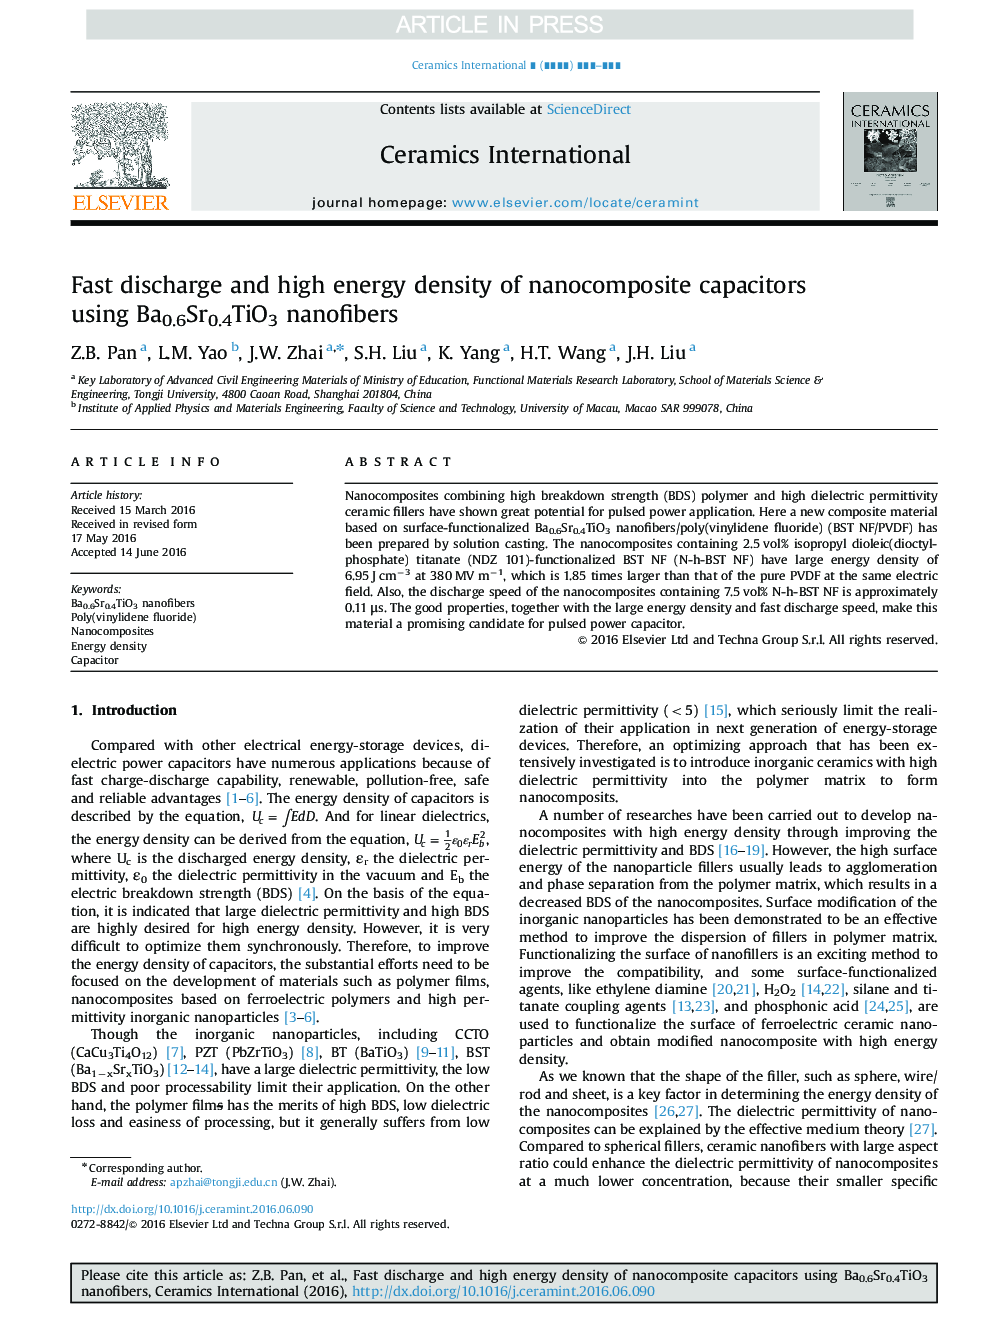 Fast discharge and high energy density of nanocomposite capacitors using Ba0.6Sr0.4TiO3 nanofibers